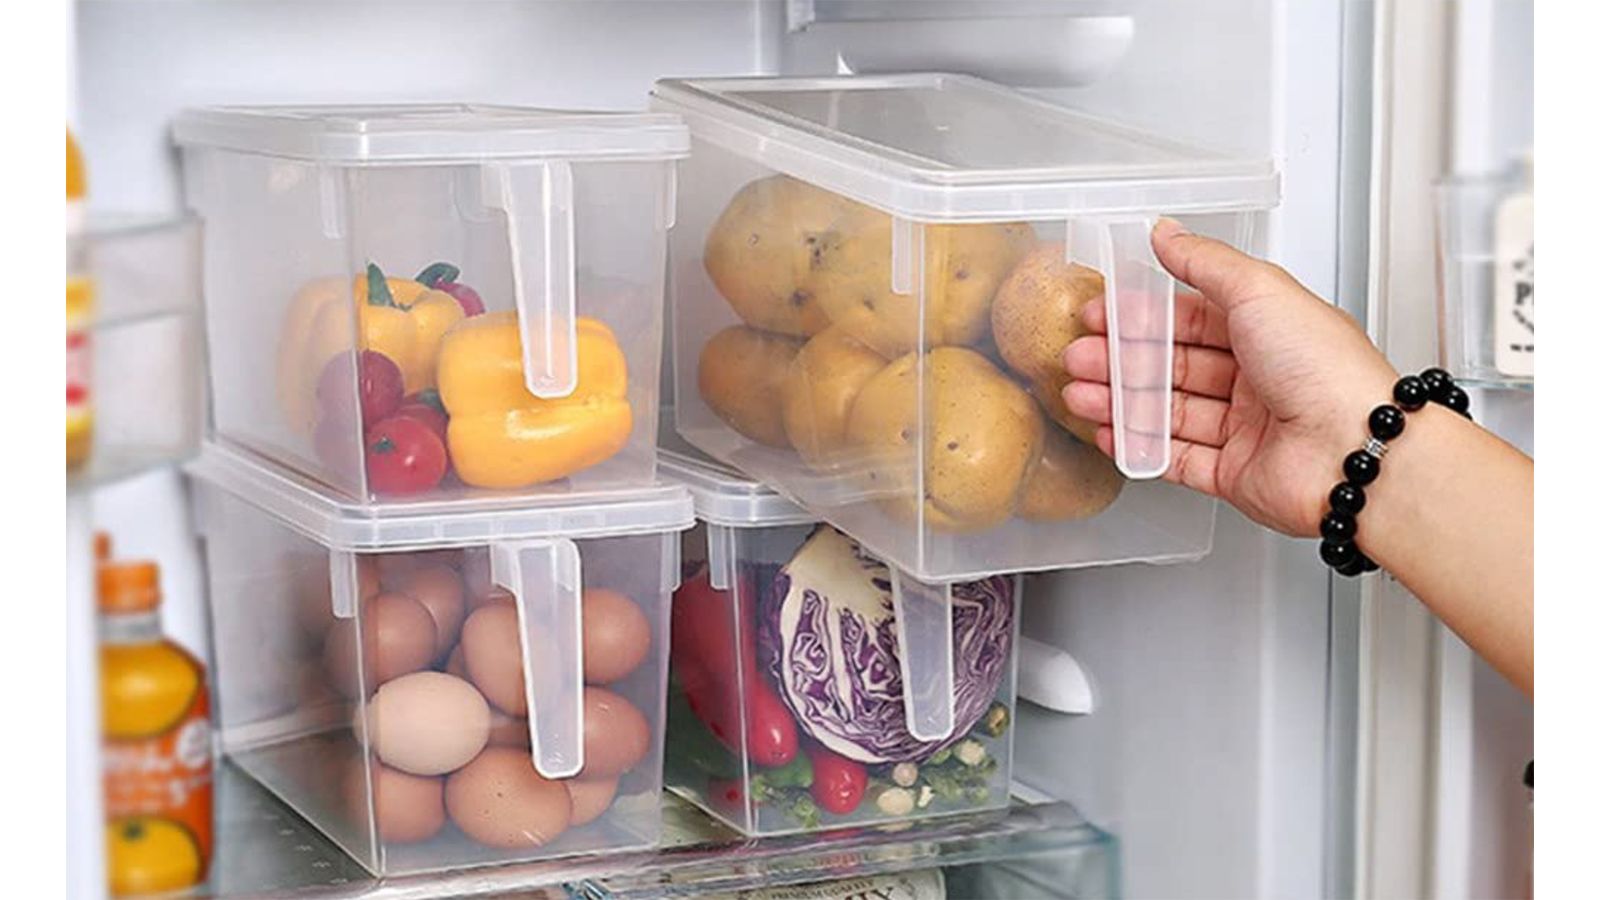 Fridge Organization Ideas - Tour Our Refrigerator! - Small Stuff